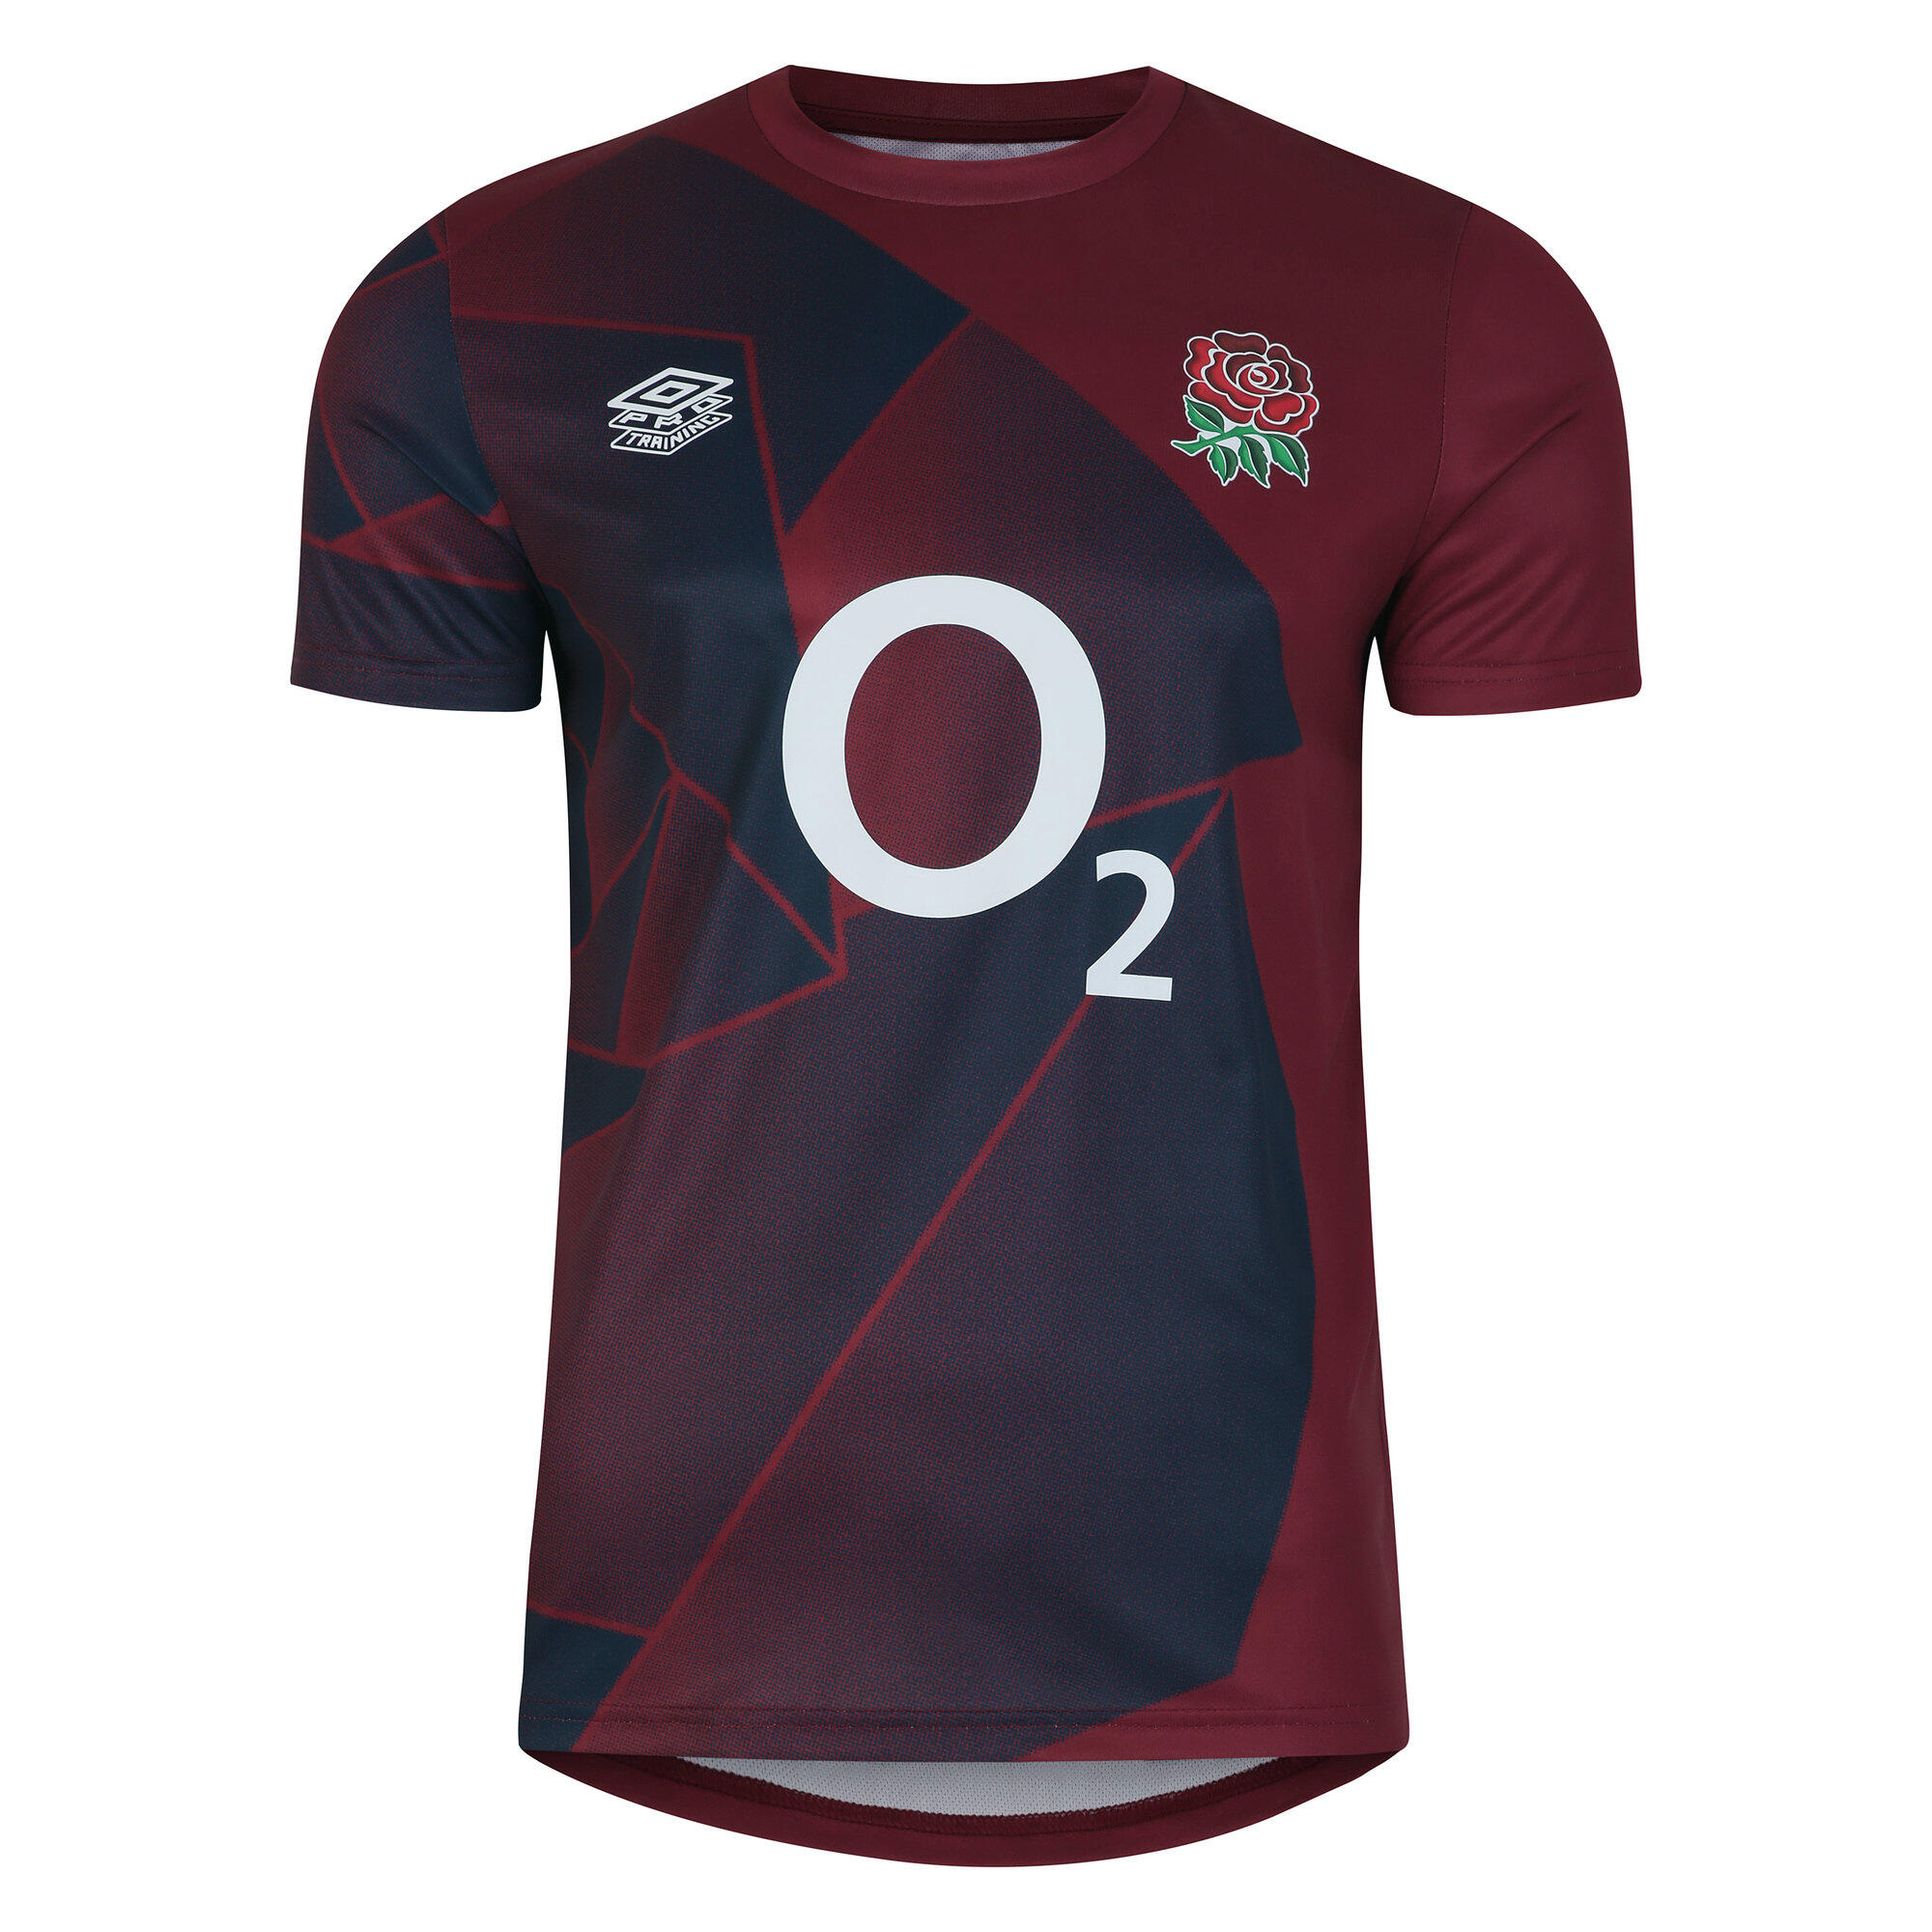 Mens 23/24 England Rugby Warm Up Jersey (Tibetan Red/Navy Blazer) 1/4